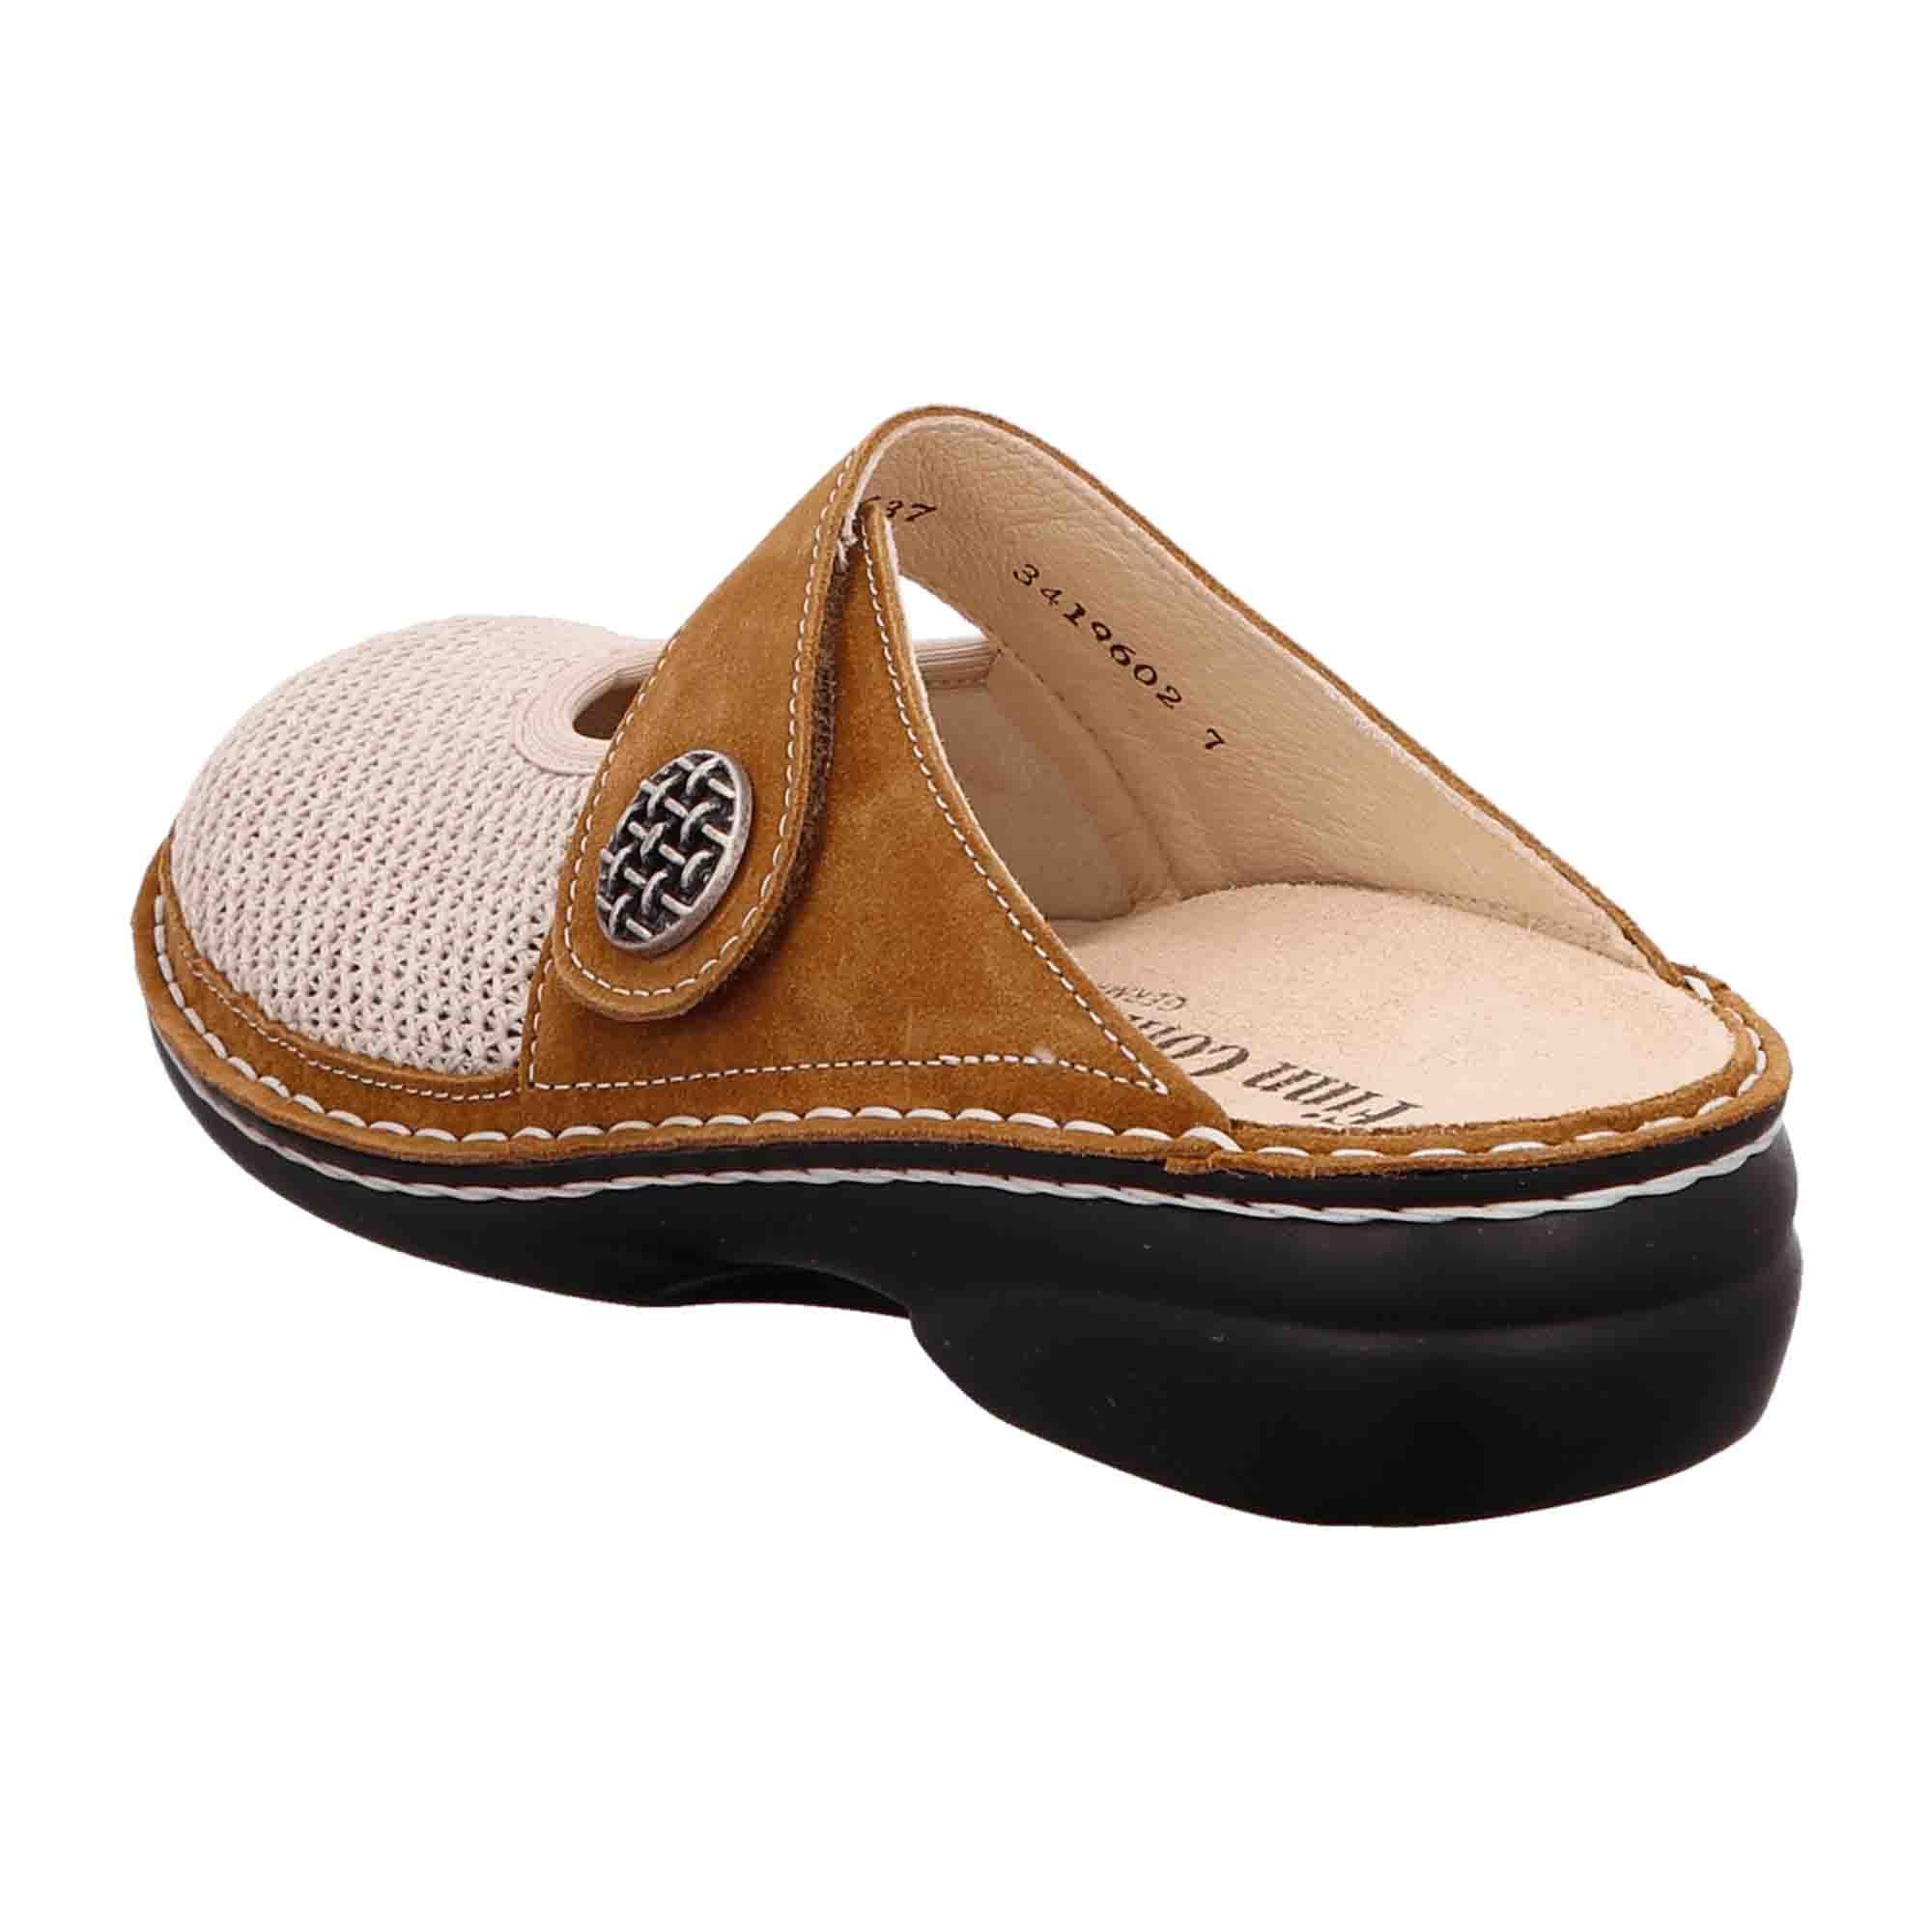 Finn Comfort Asinara Women’s Sandals, Stylish & Comfortable, Beige